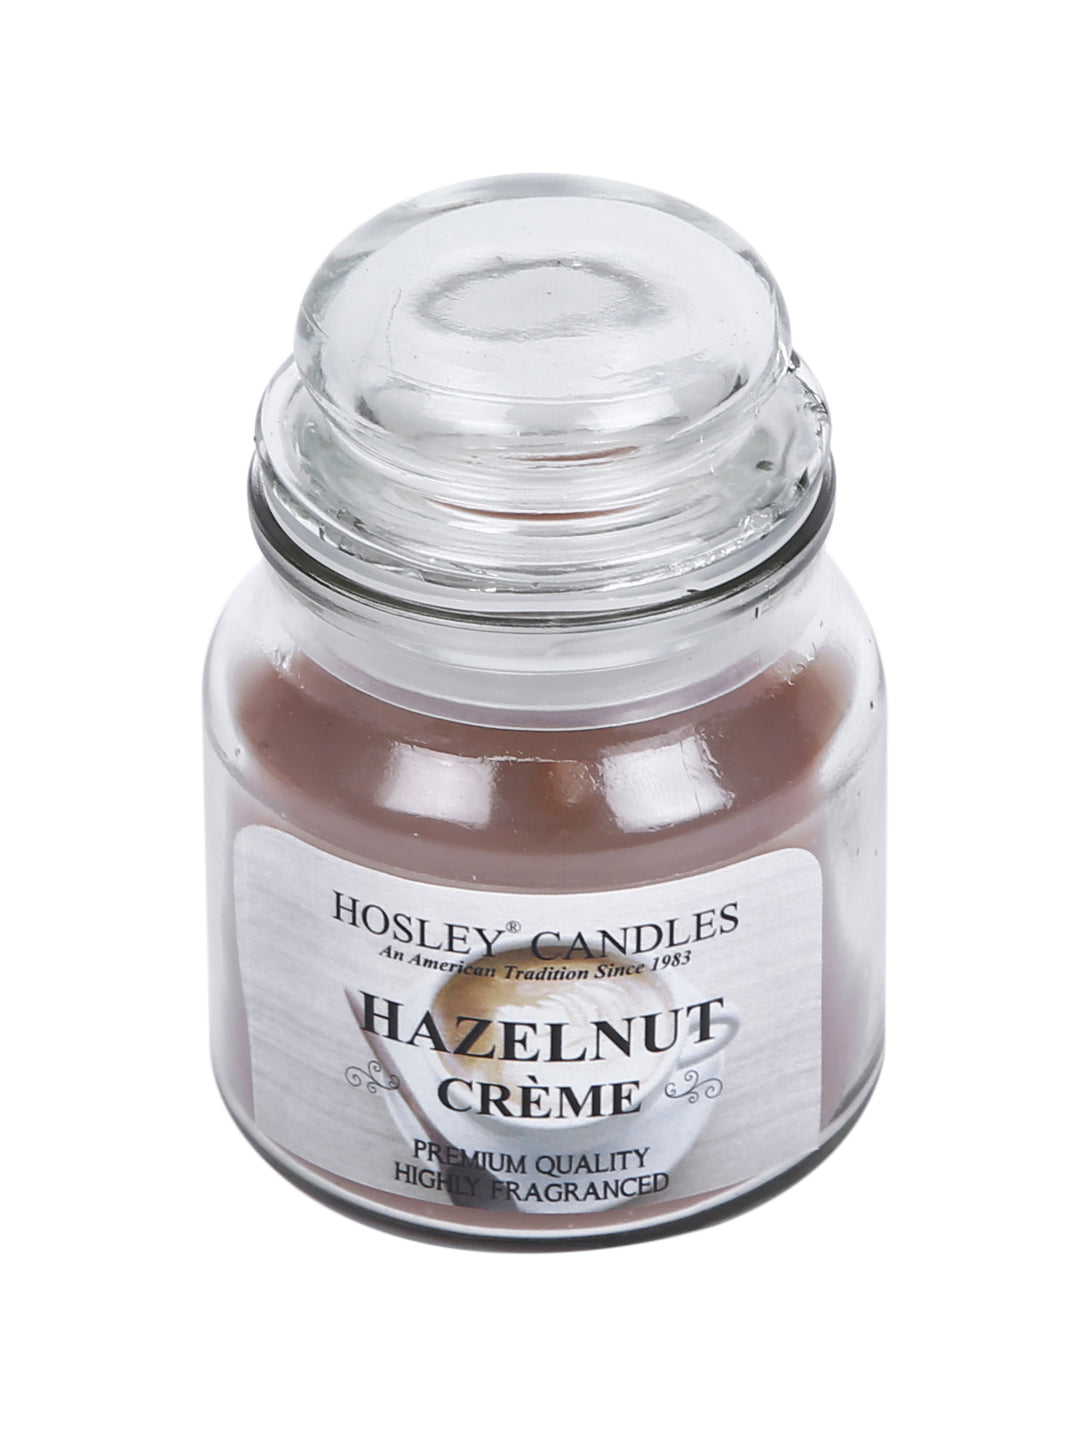 Hosley® Hazelnut Creme Highly Fragranced, 2.65 Oz wax, Jar Candle